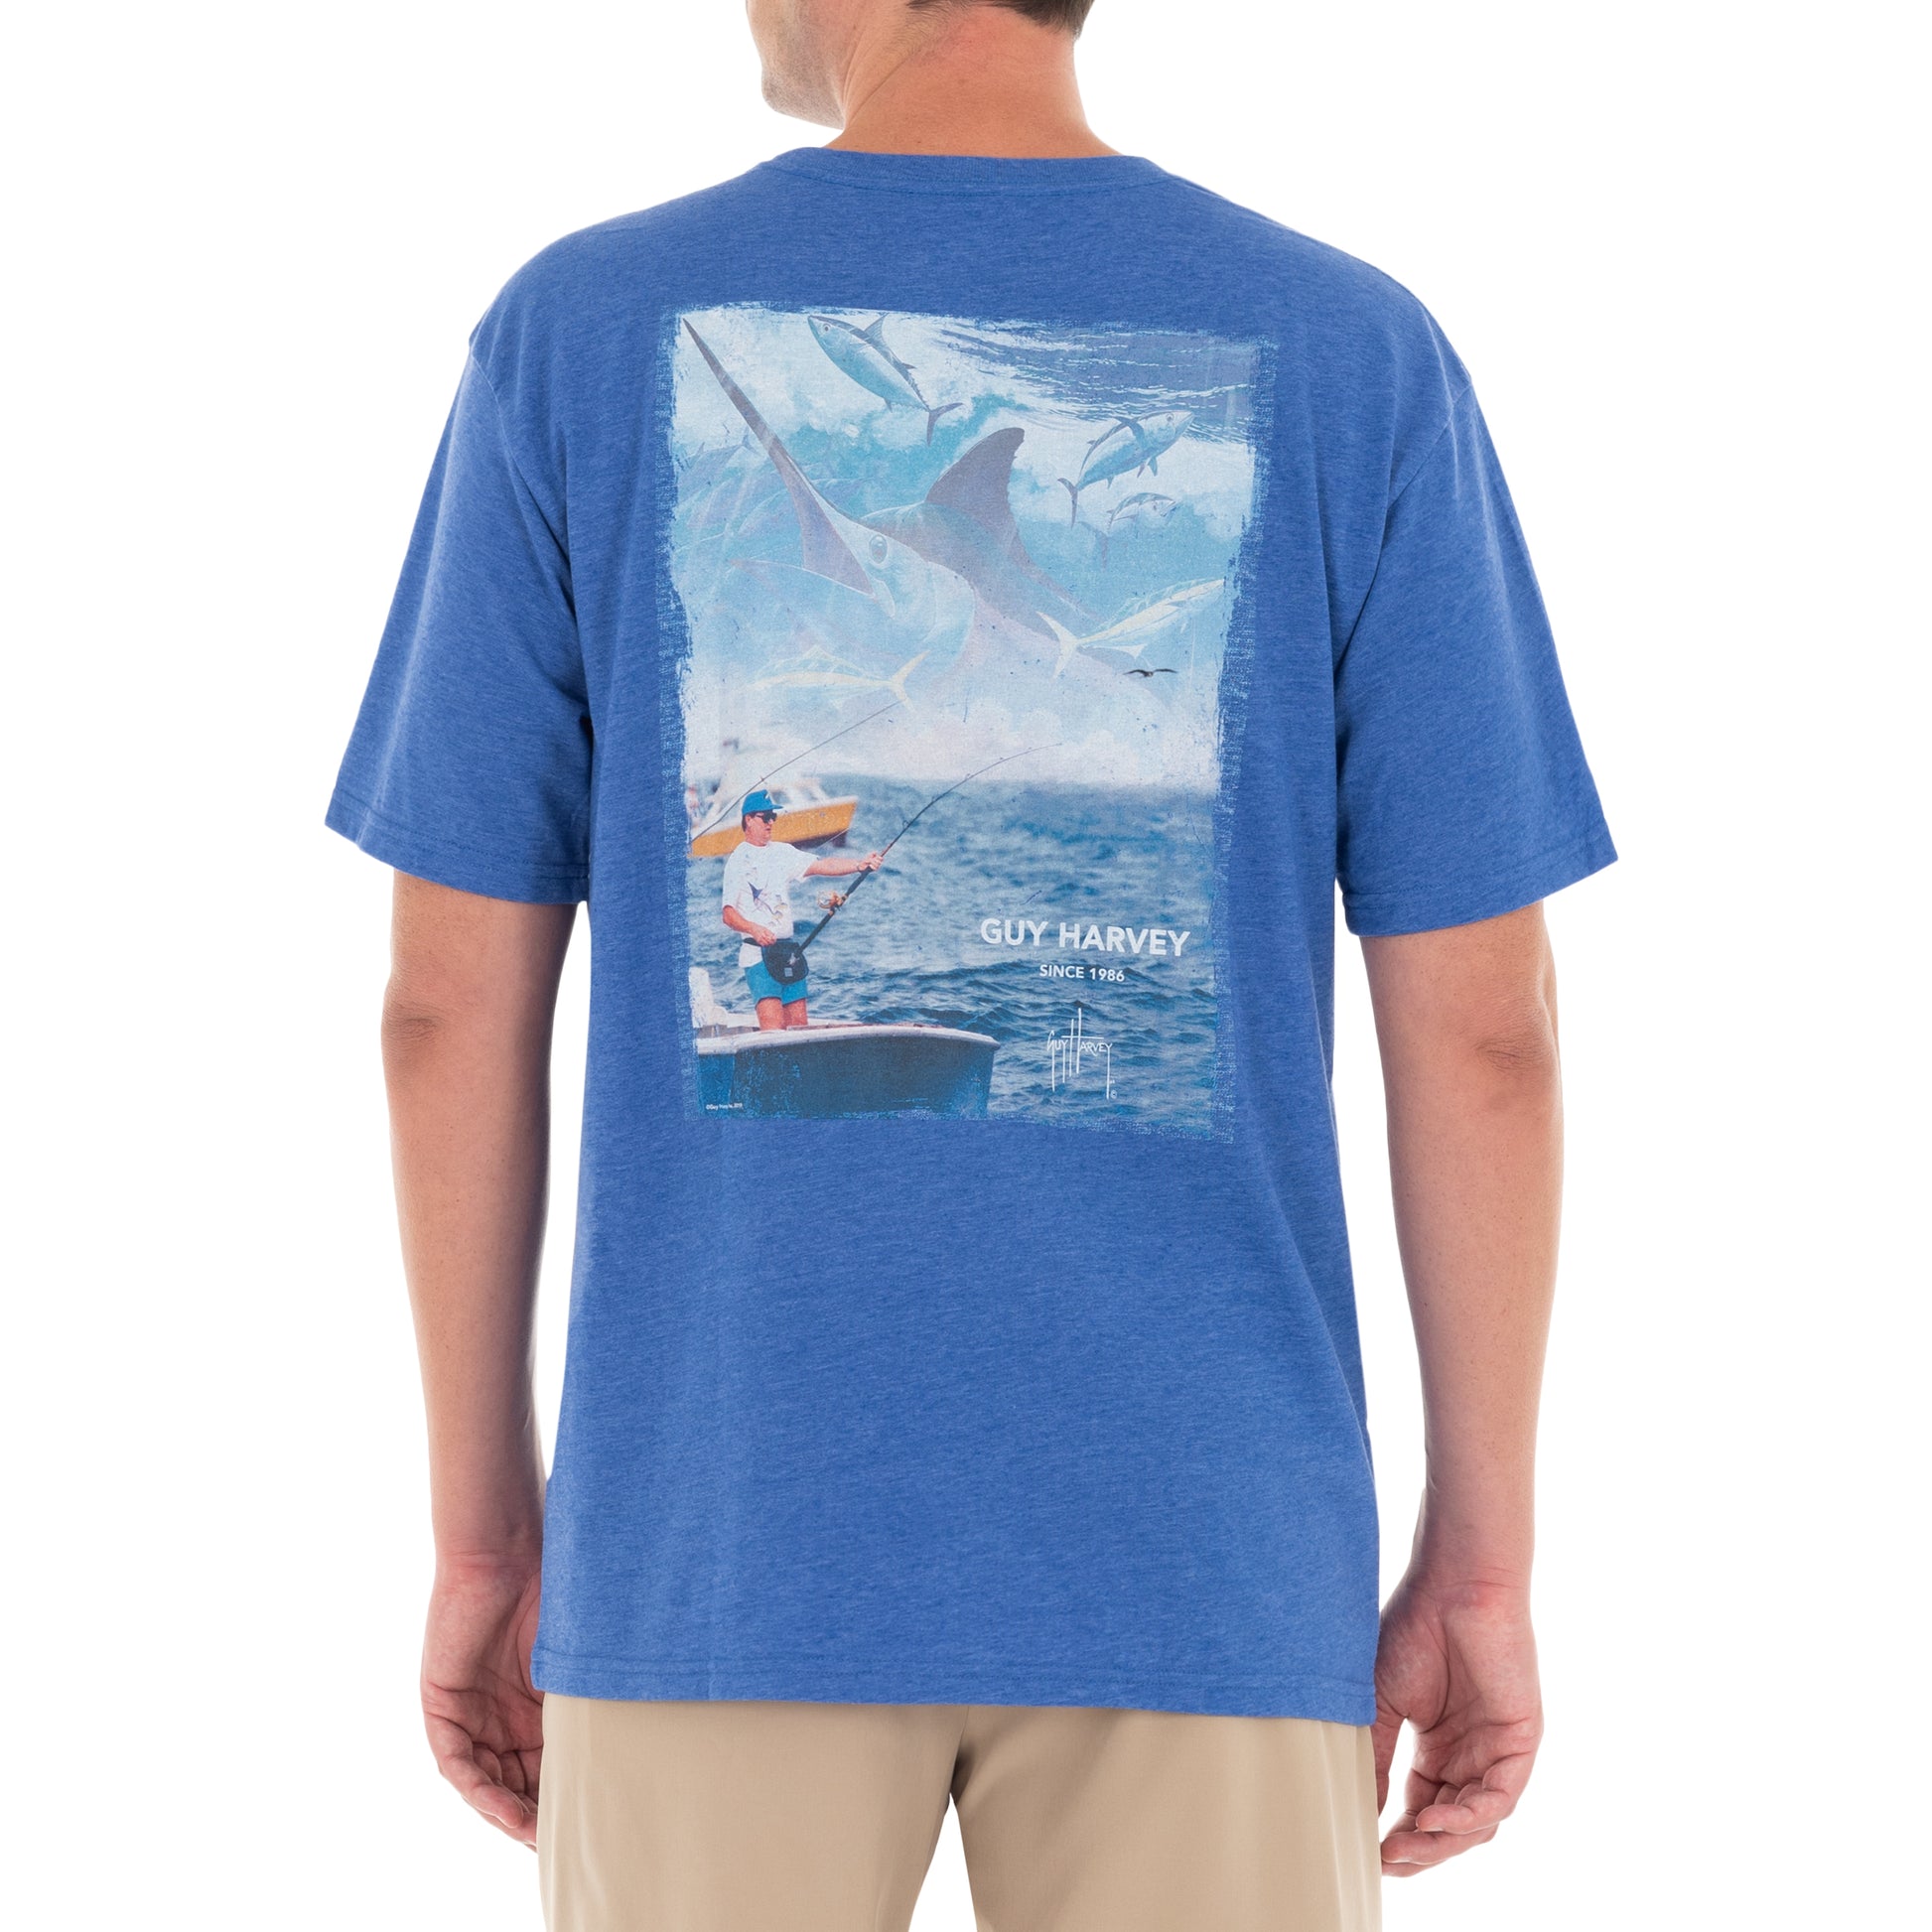 Guy Harvey | Men's Dr. Harvey Fishing Short Sleeve Royal T-Shirt, Medium